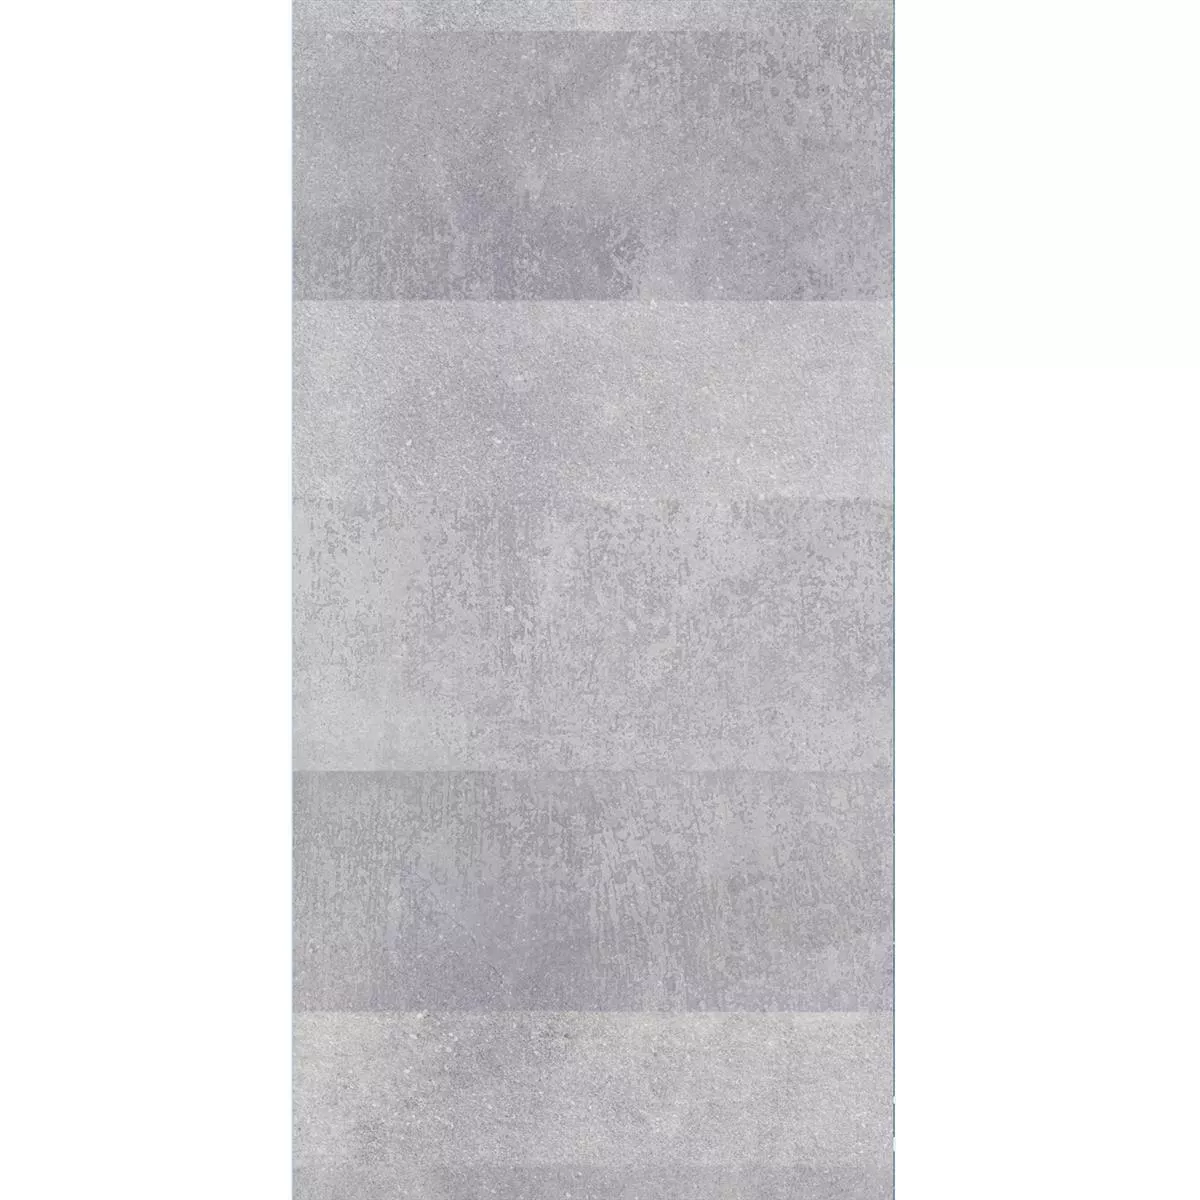 Vloertegels Torino Cement Optic Lappato Grijs 60x120cm